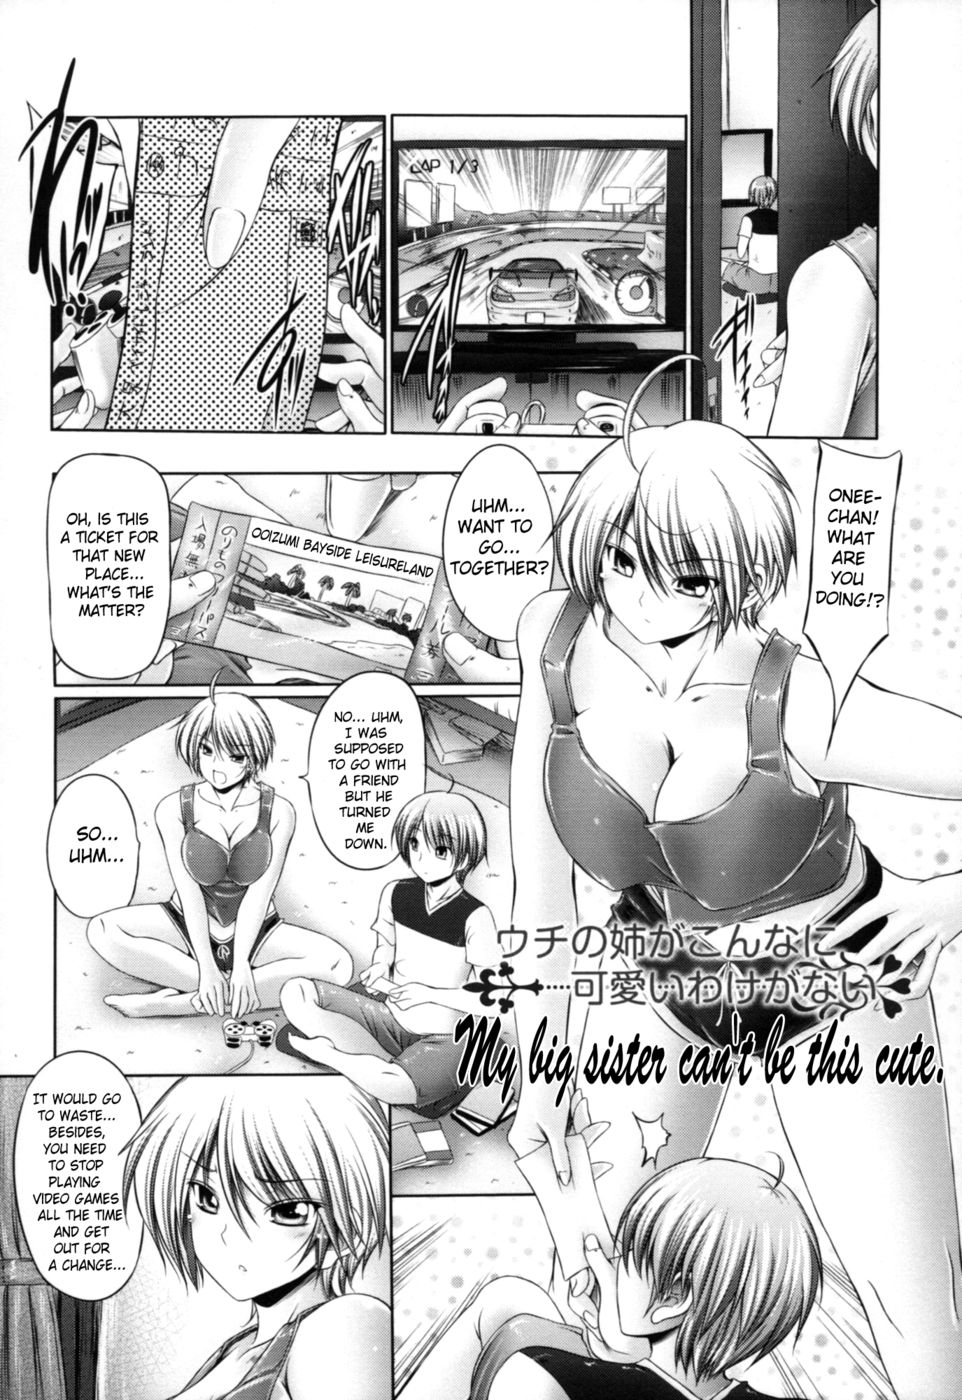 Hentai Manga Comic-My Big Sister Can't Be This Cute-Read-1